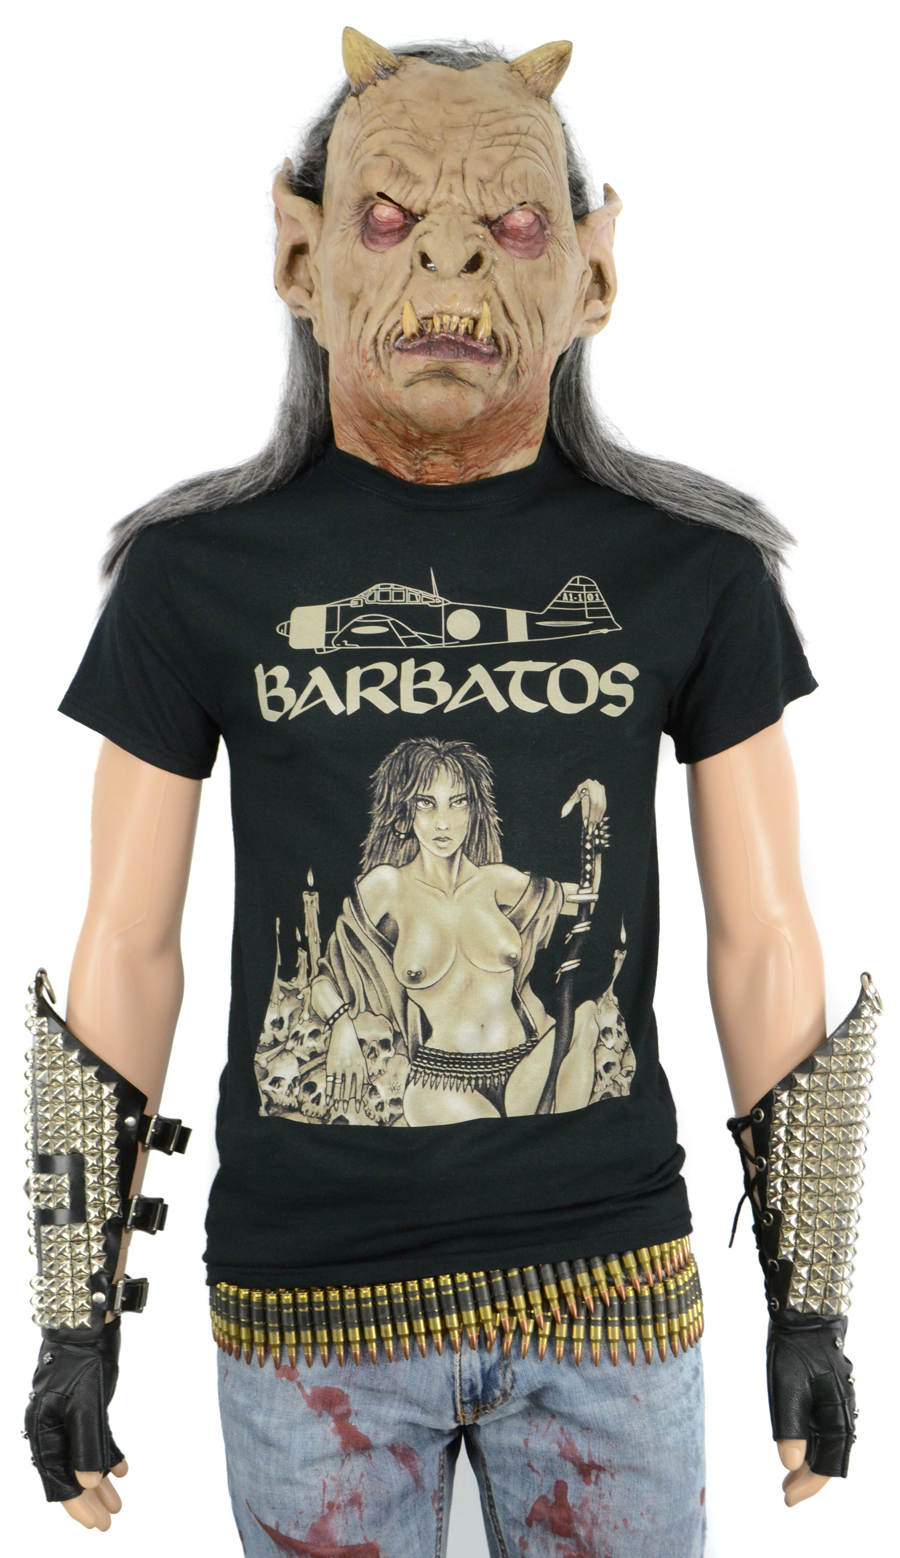 BARBATOS - Straight Metal War